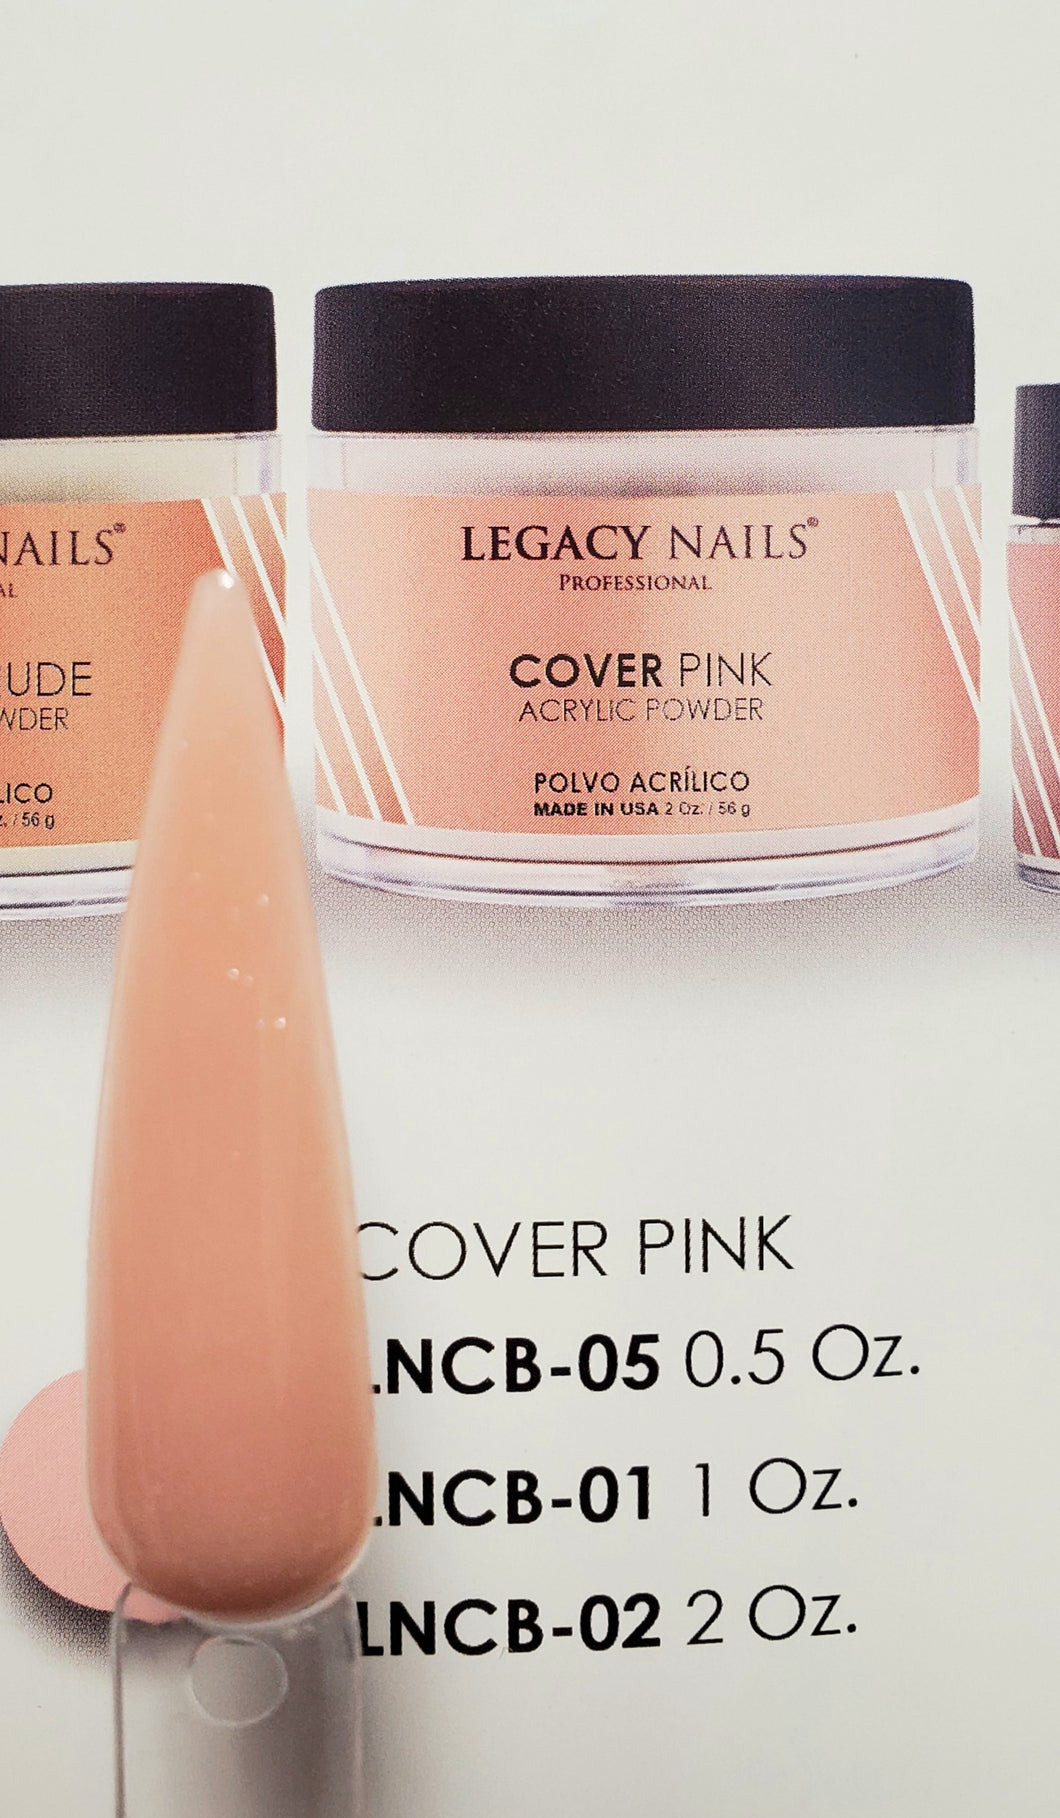 Legacy nails Cover pink acrylic powder